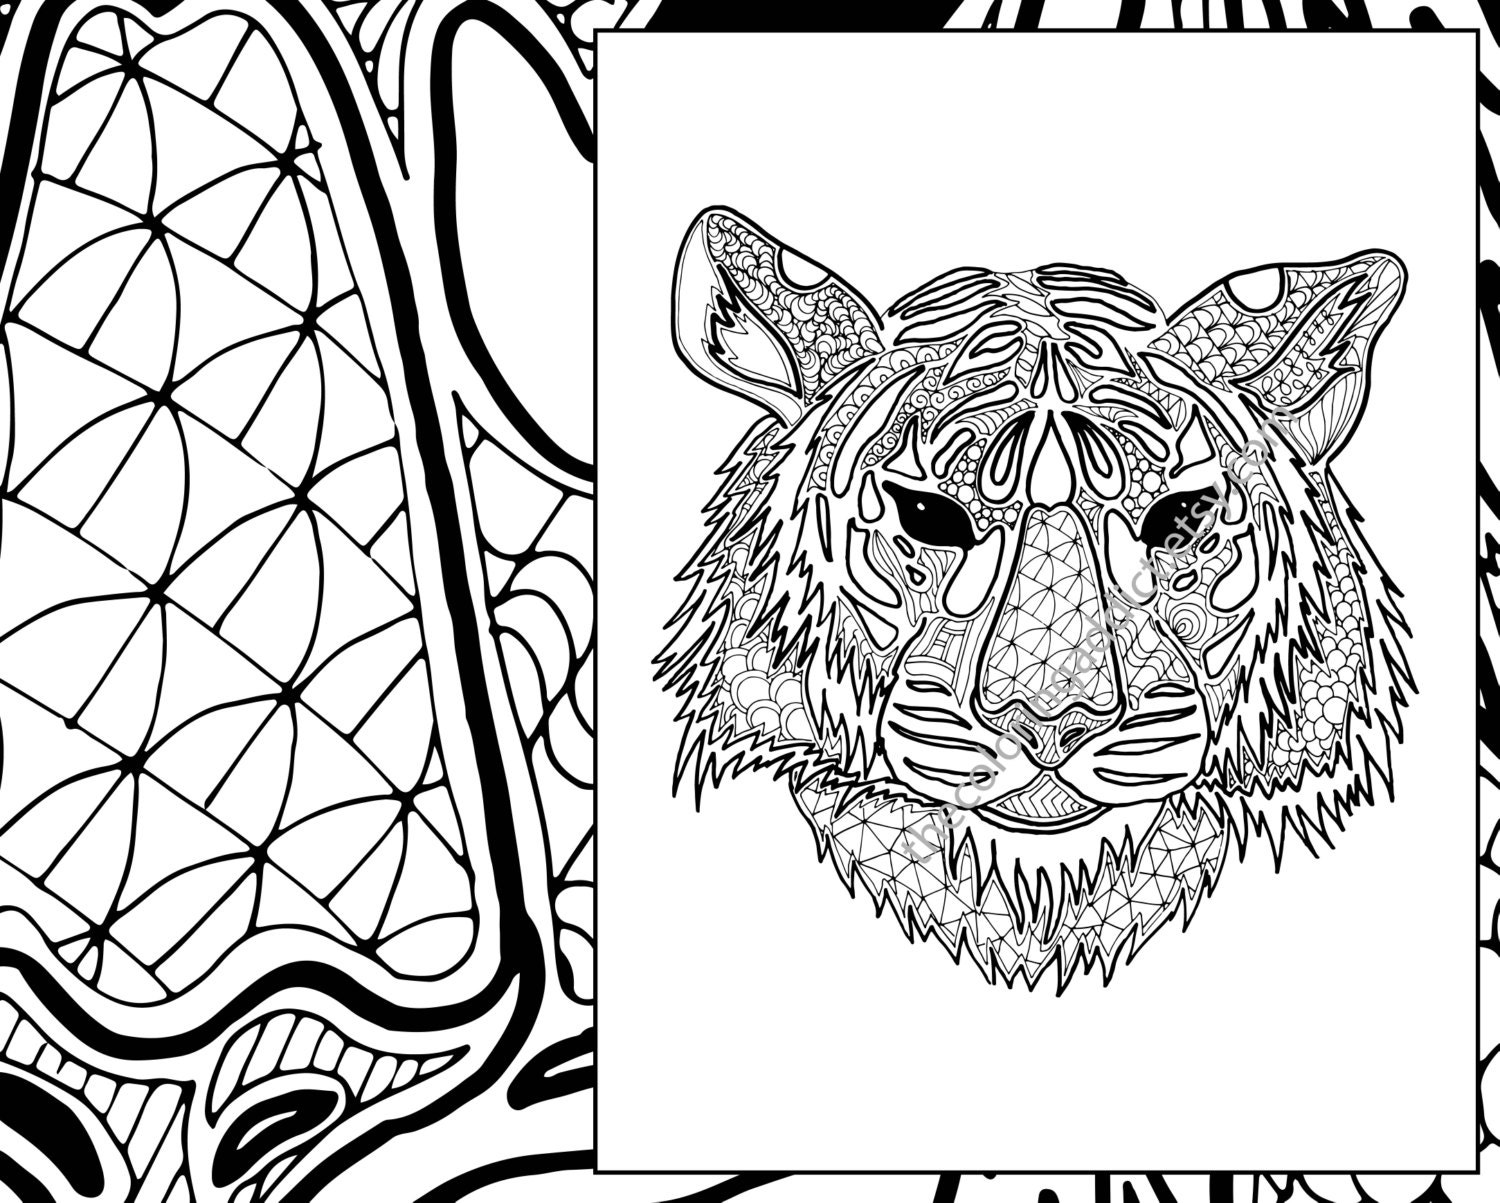 Download digital tiger coloring sheet animal coloring pdf zentangle